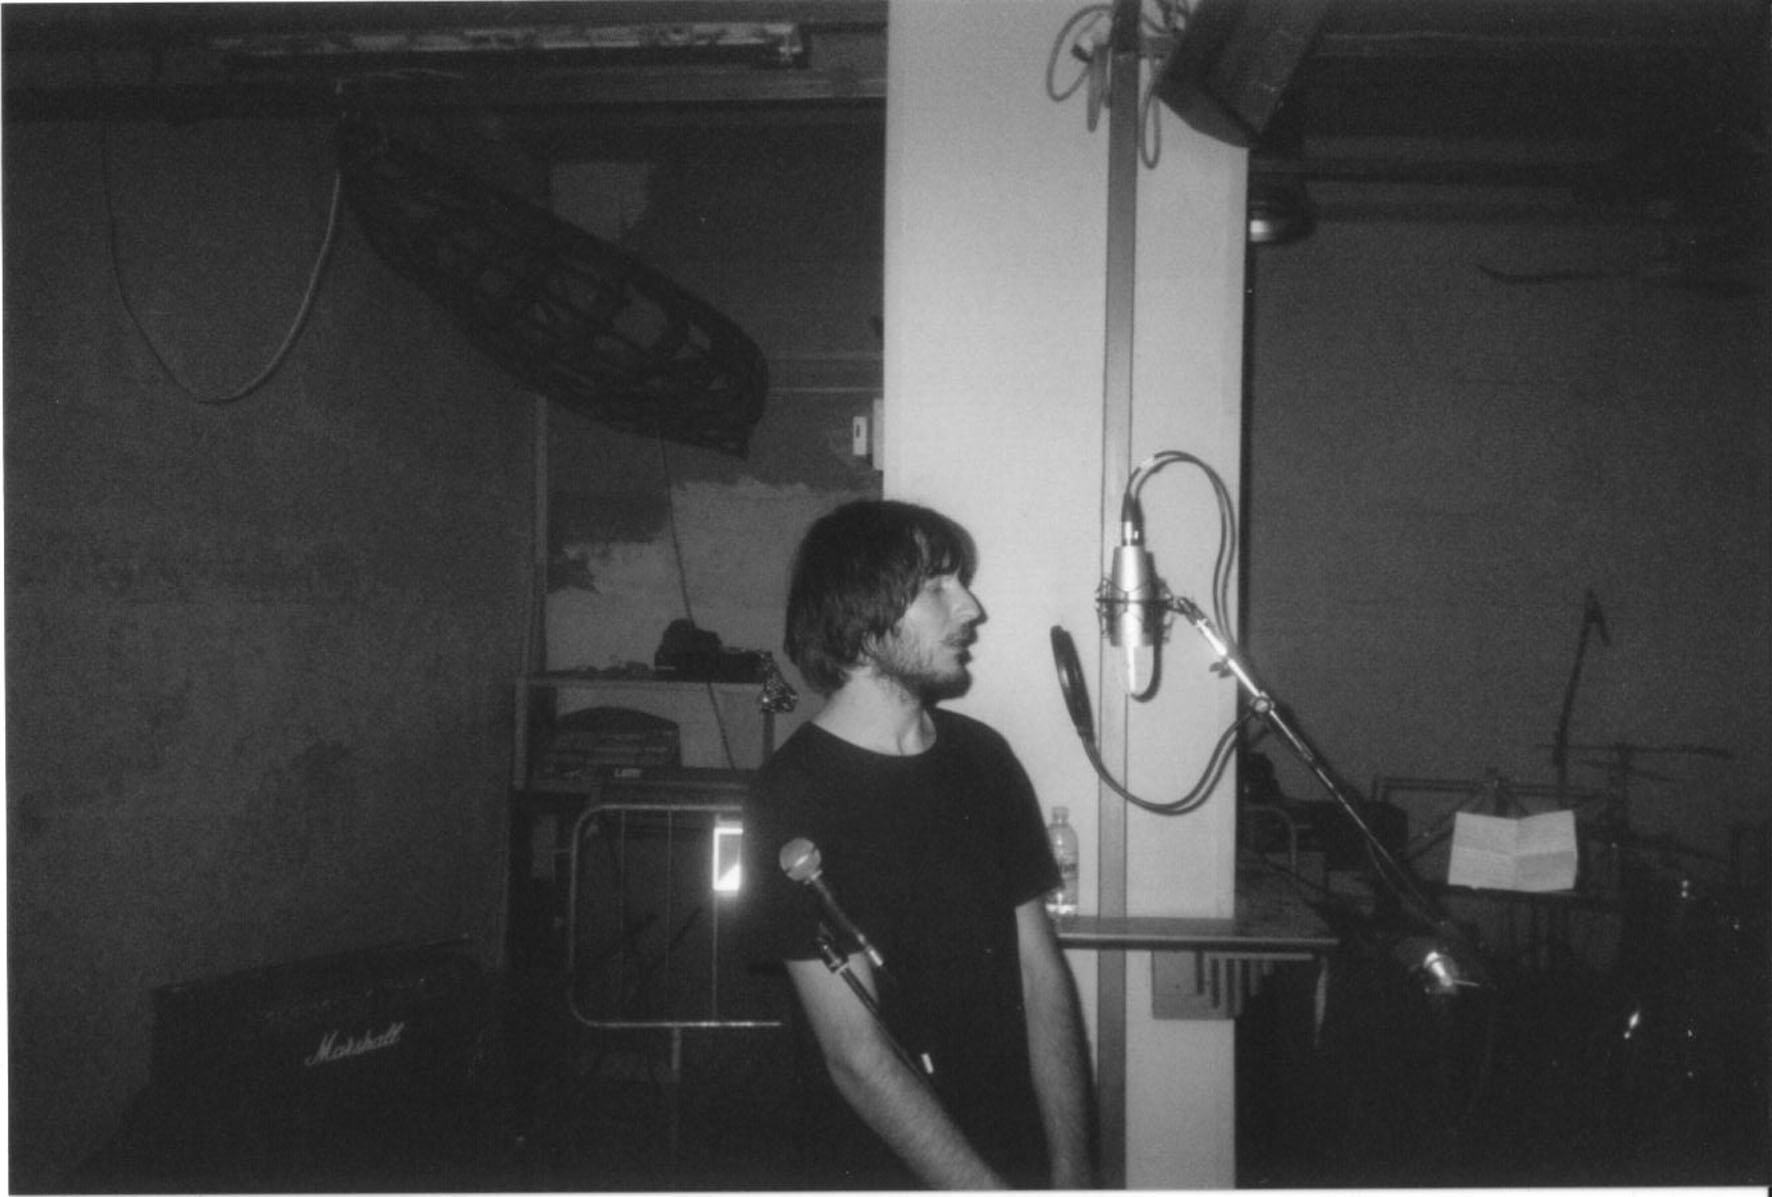 nexus recording (agosto 2005)